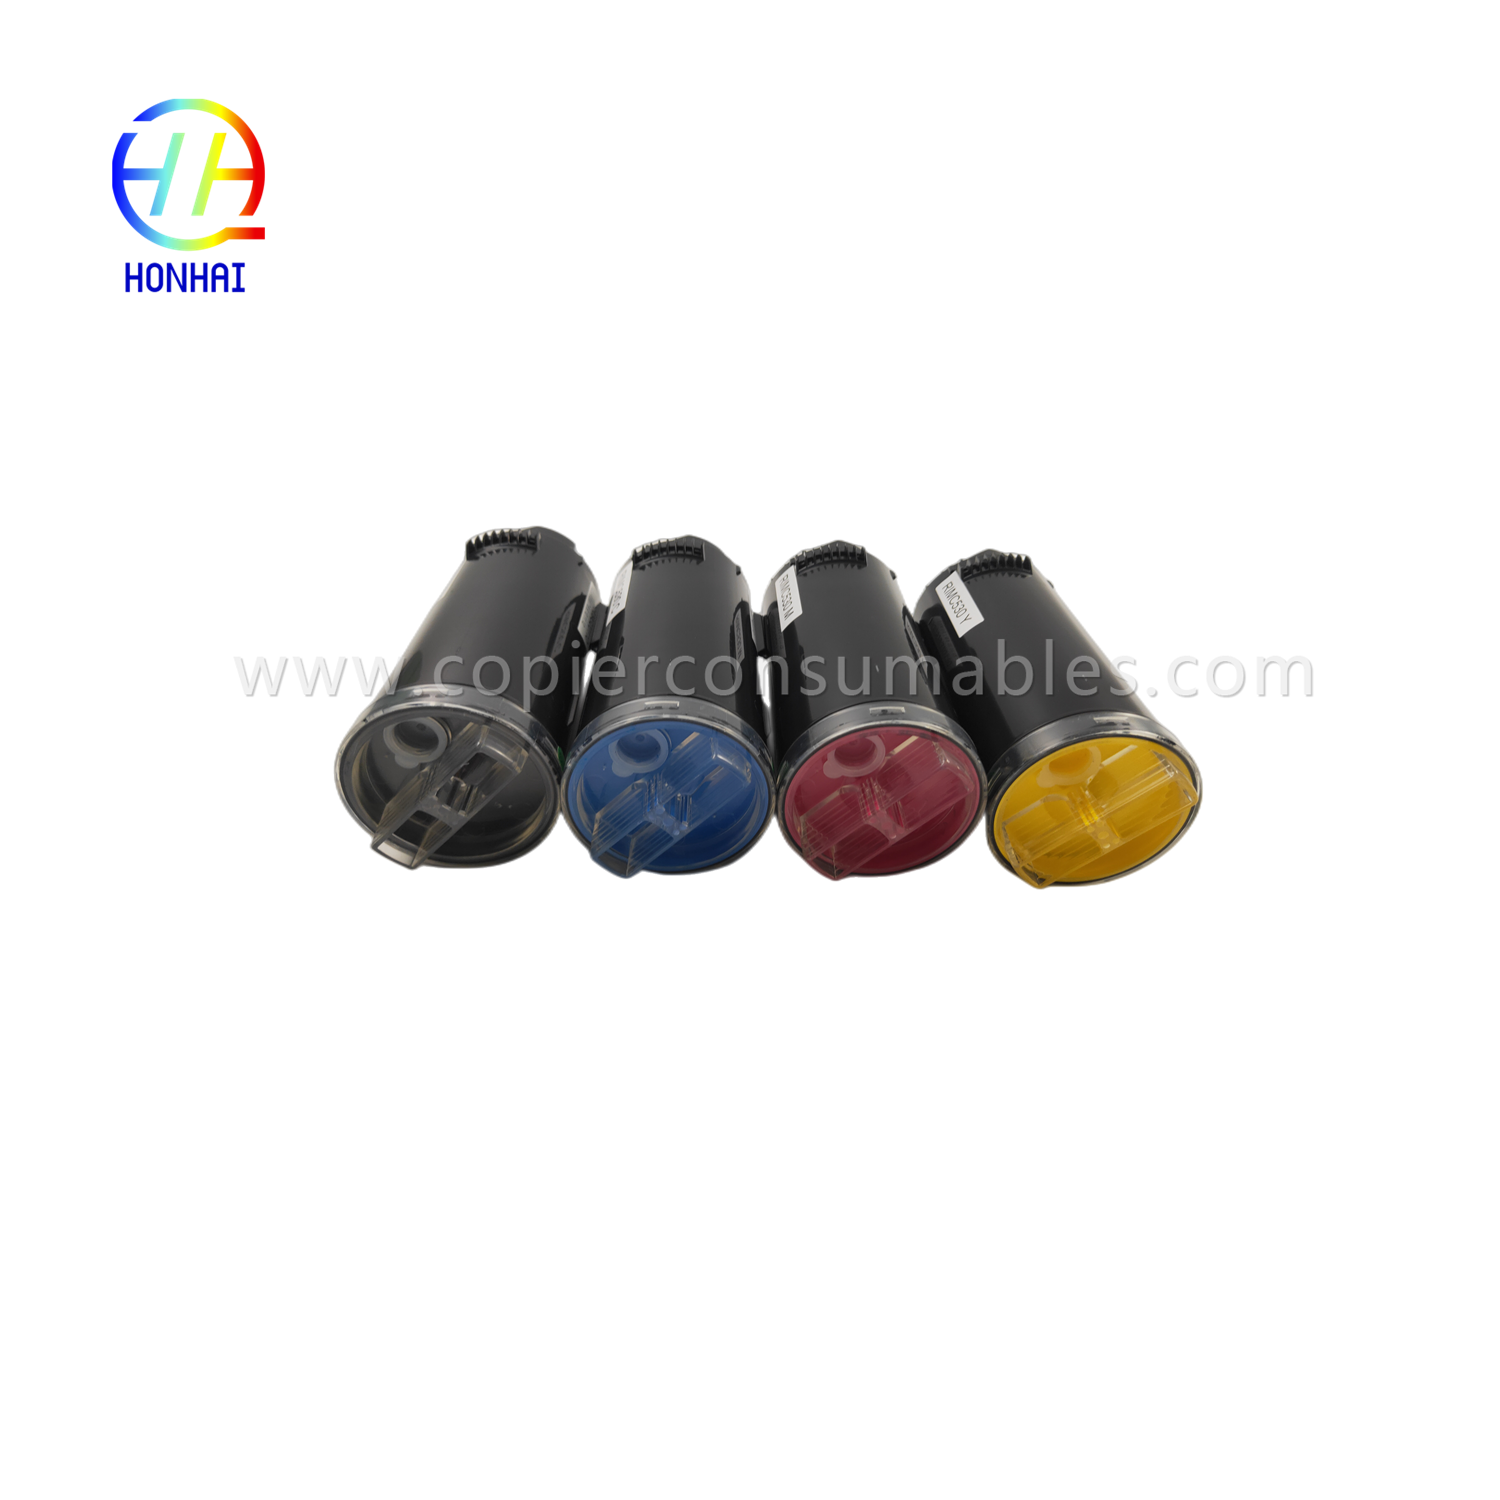 https://c585.goodao.net/toner-cartridge-set-imported-powder-for-ricoh-imc530-imc530f-imc530fb-ref-418240-ref-418241-ref-418242-ref-418243-product